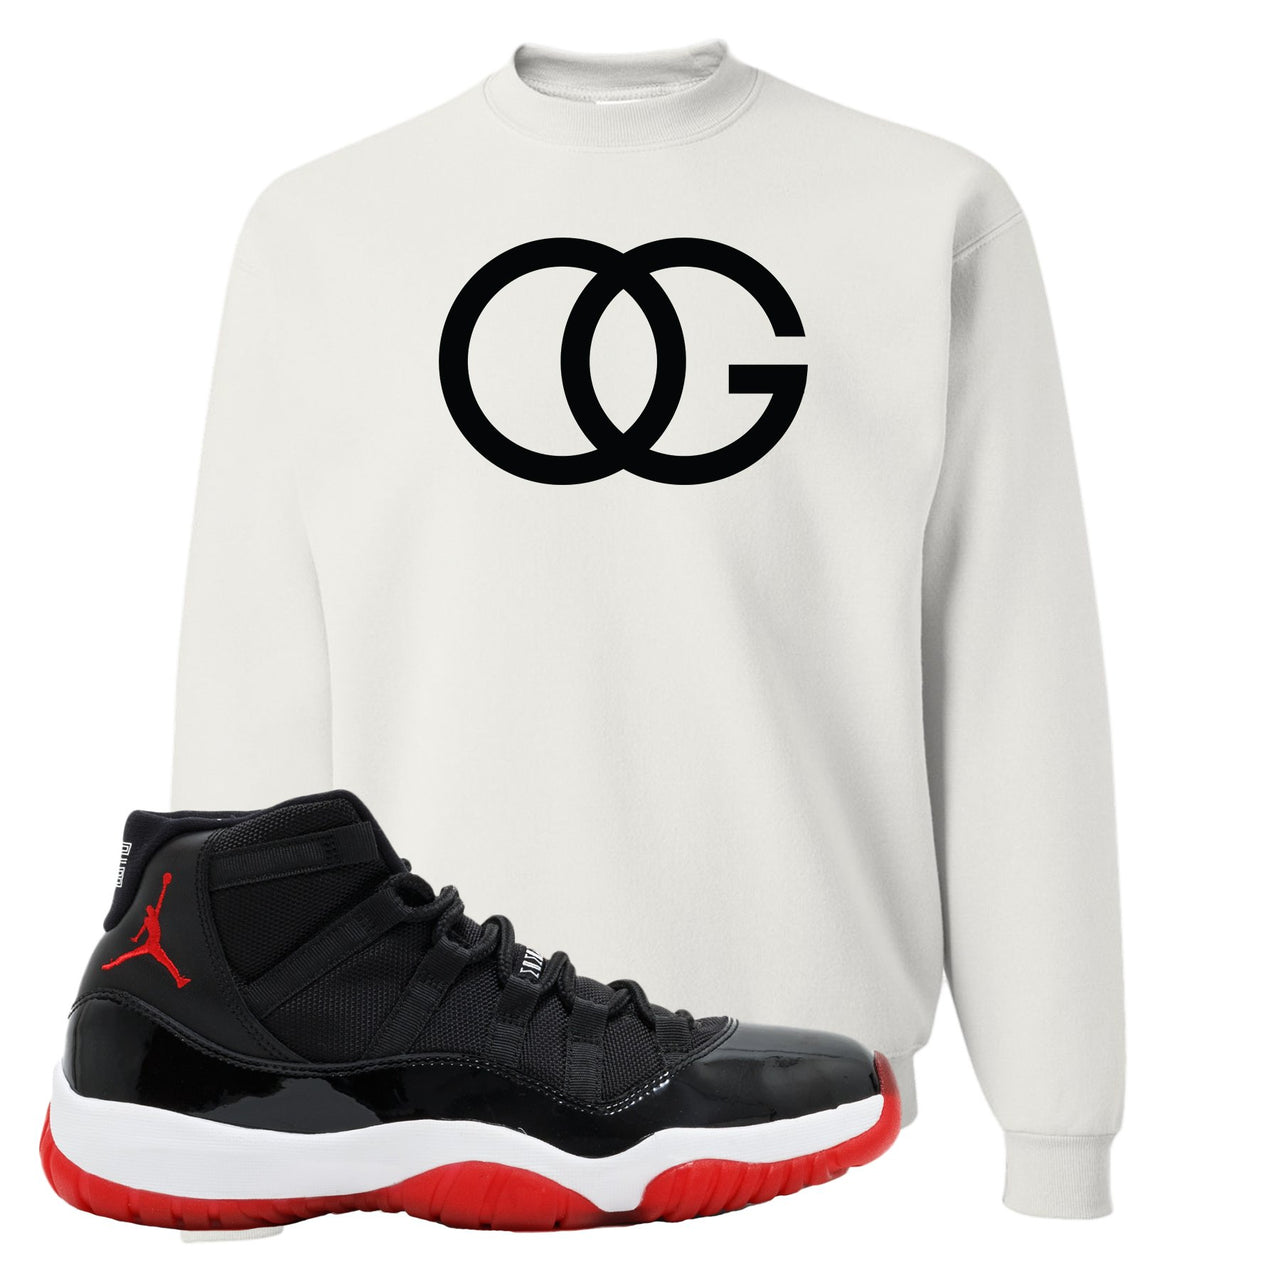 Jordan 11 Bred OG White Sneaker Hook Up Crewneck Sweatshirt